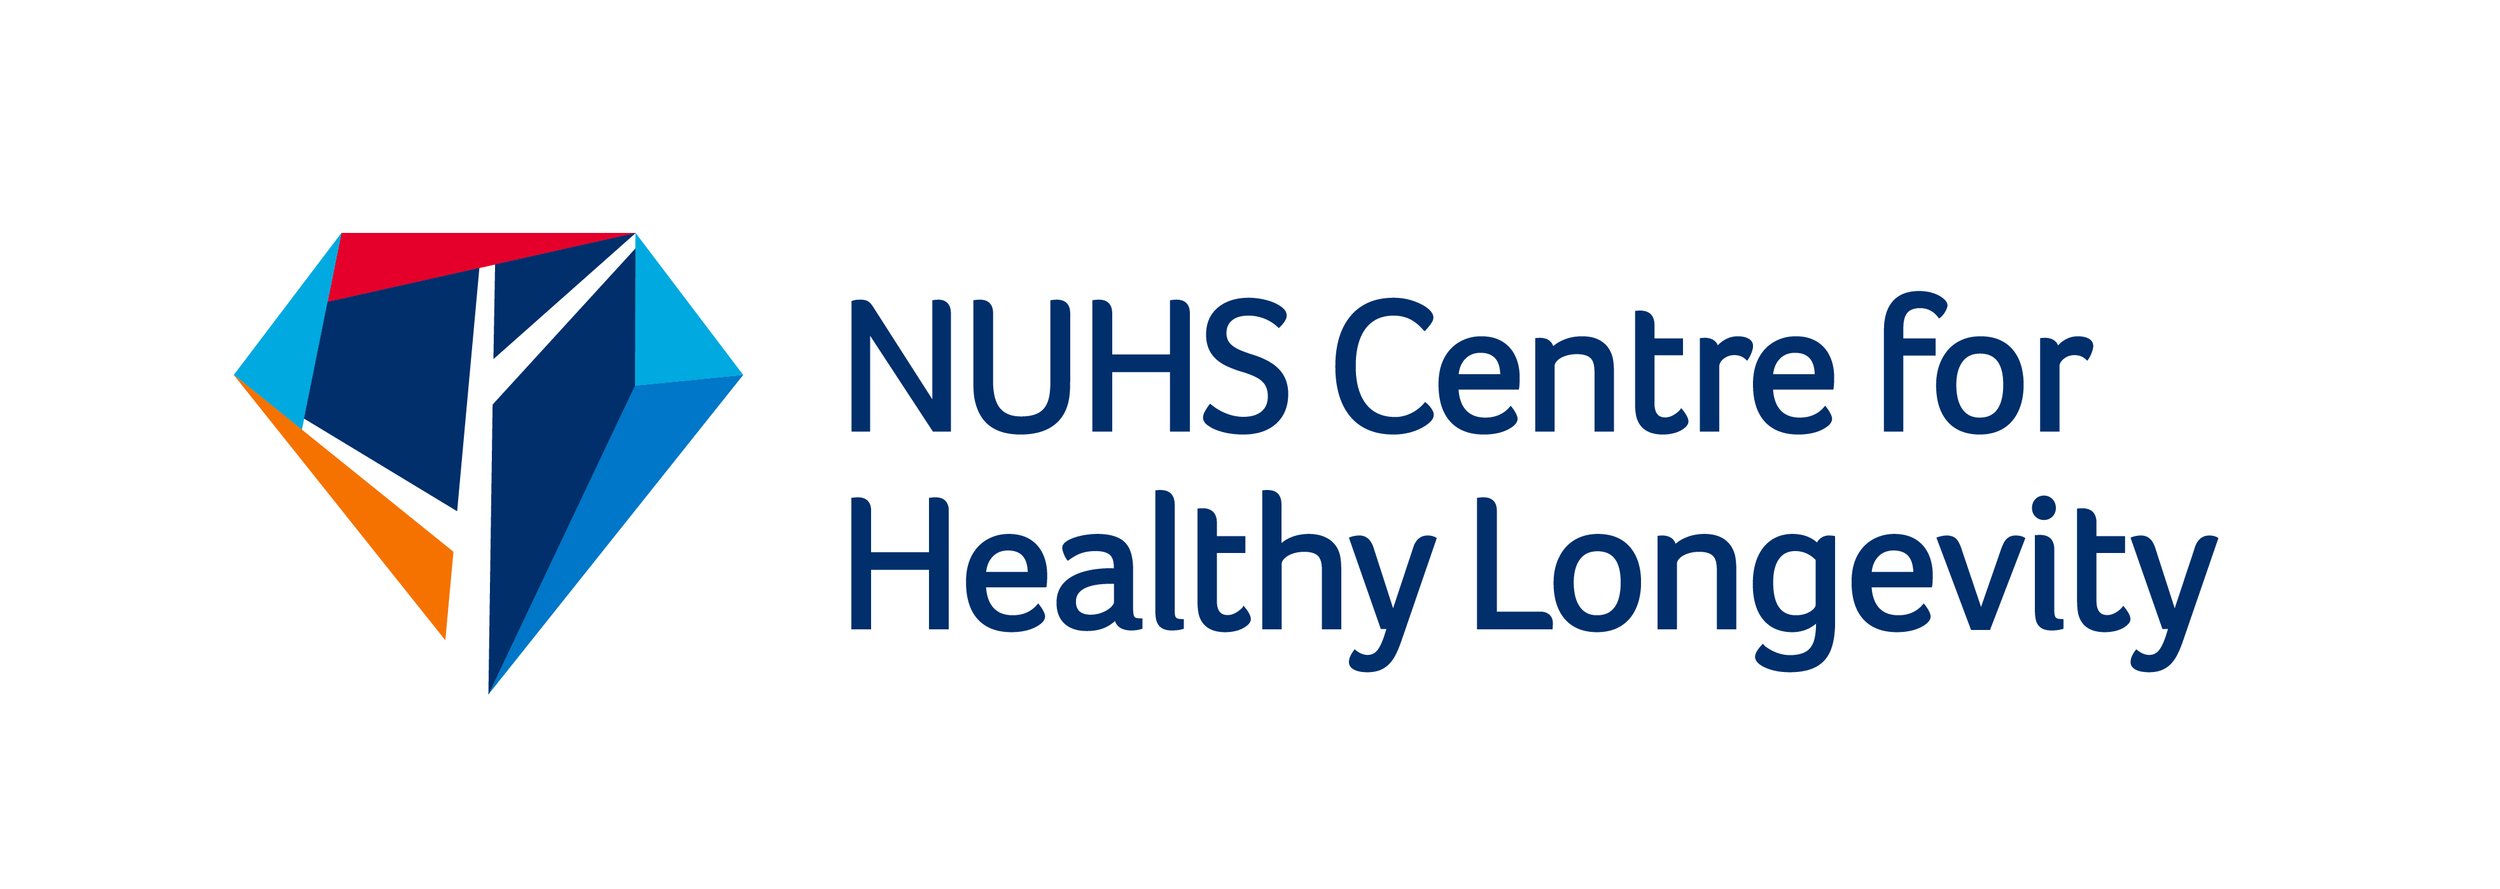 NUHS Centre for Healthy Longevity_RGB.jpg